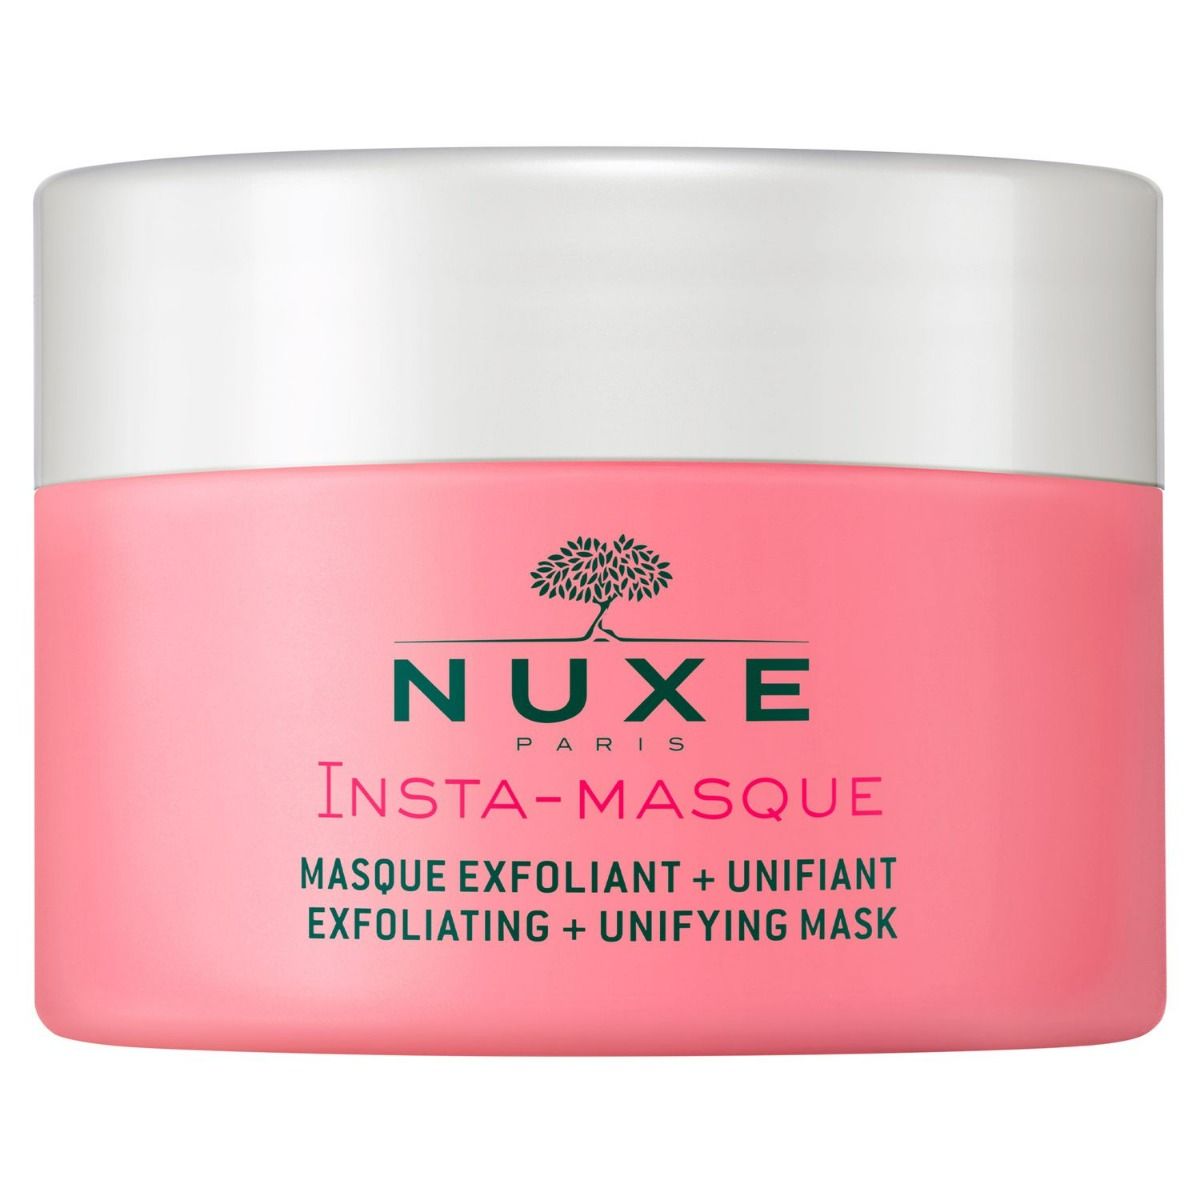 Nuxe Insta-Masque Exfoliant + Unifiant медицинская маска, 50 ml nuxe маска insta masque очищающая разглаживающая для лица 50 мл